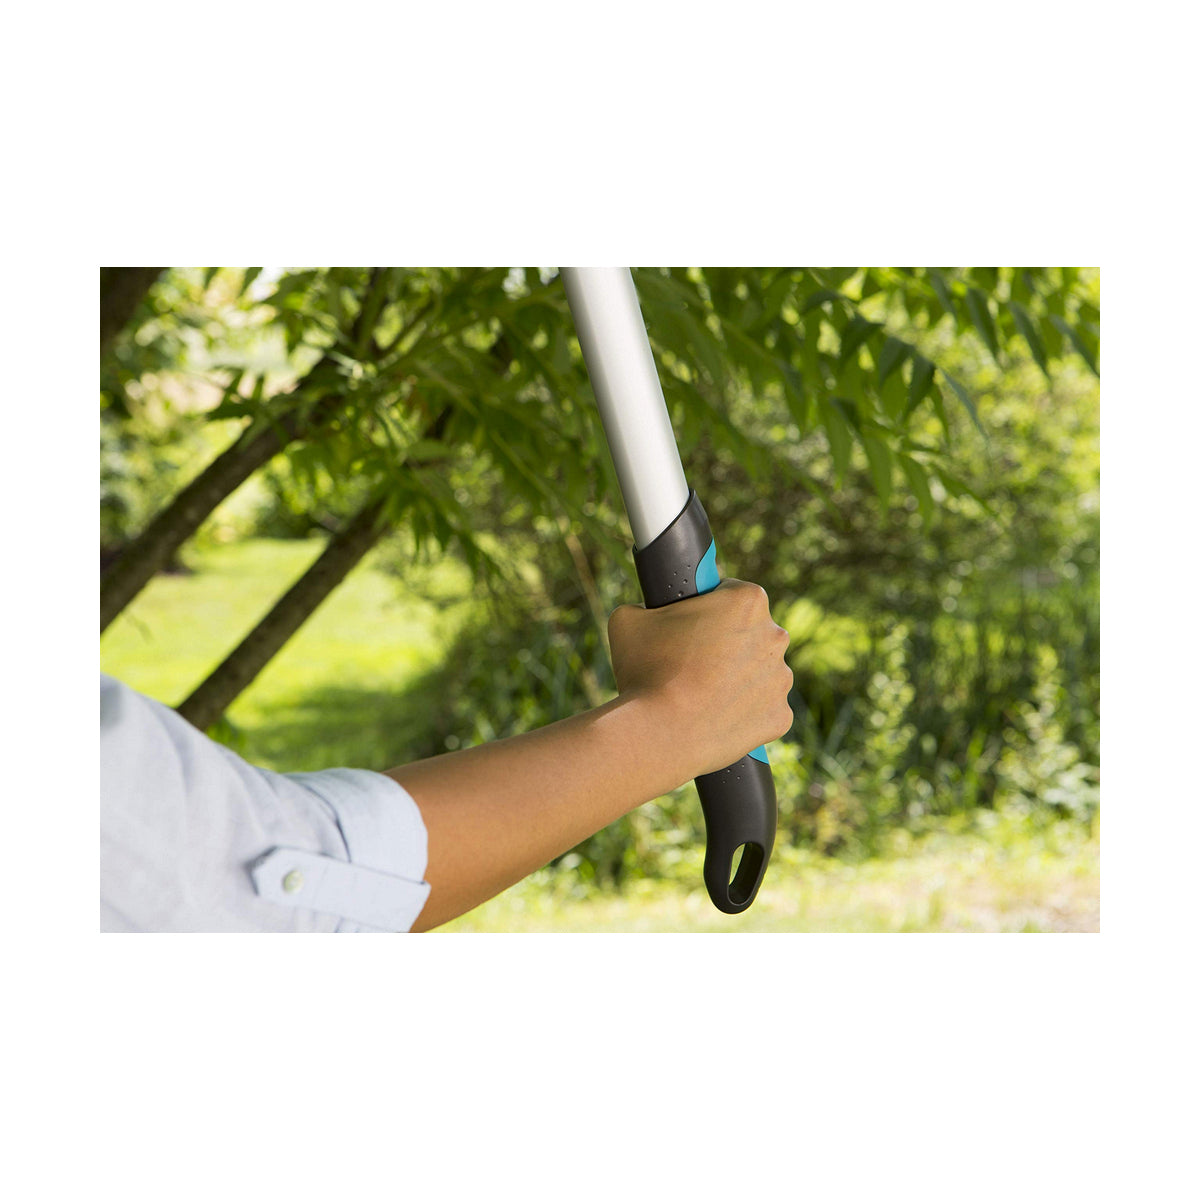 Hedging trimmer Gardena Easycut 680b 12003-20